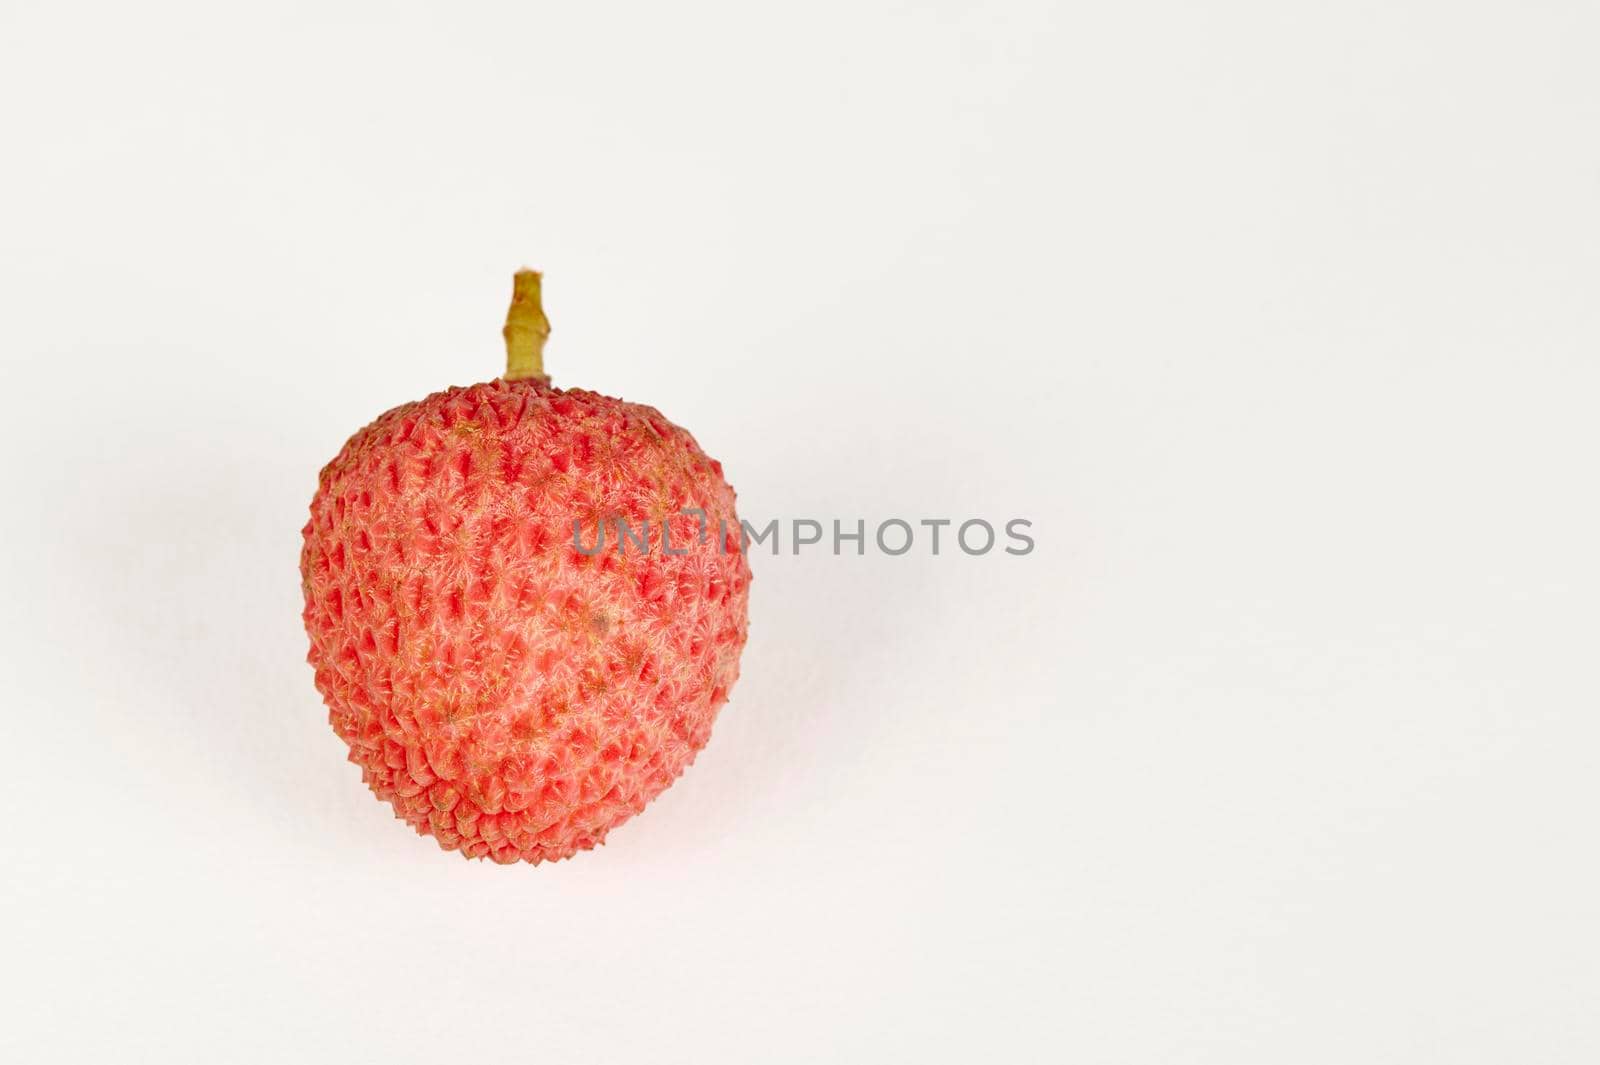 Single Litchi fruit on a white background